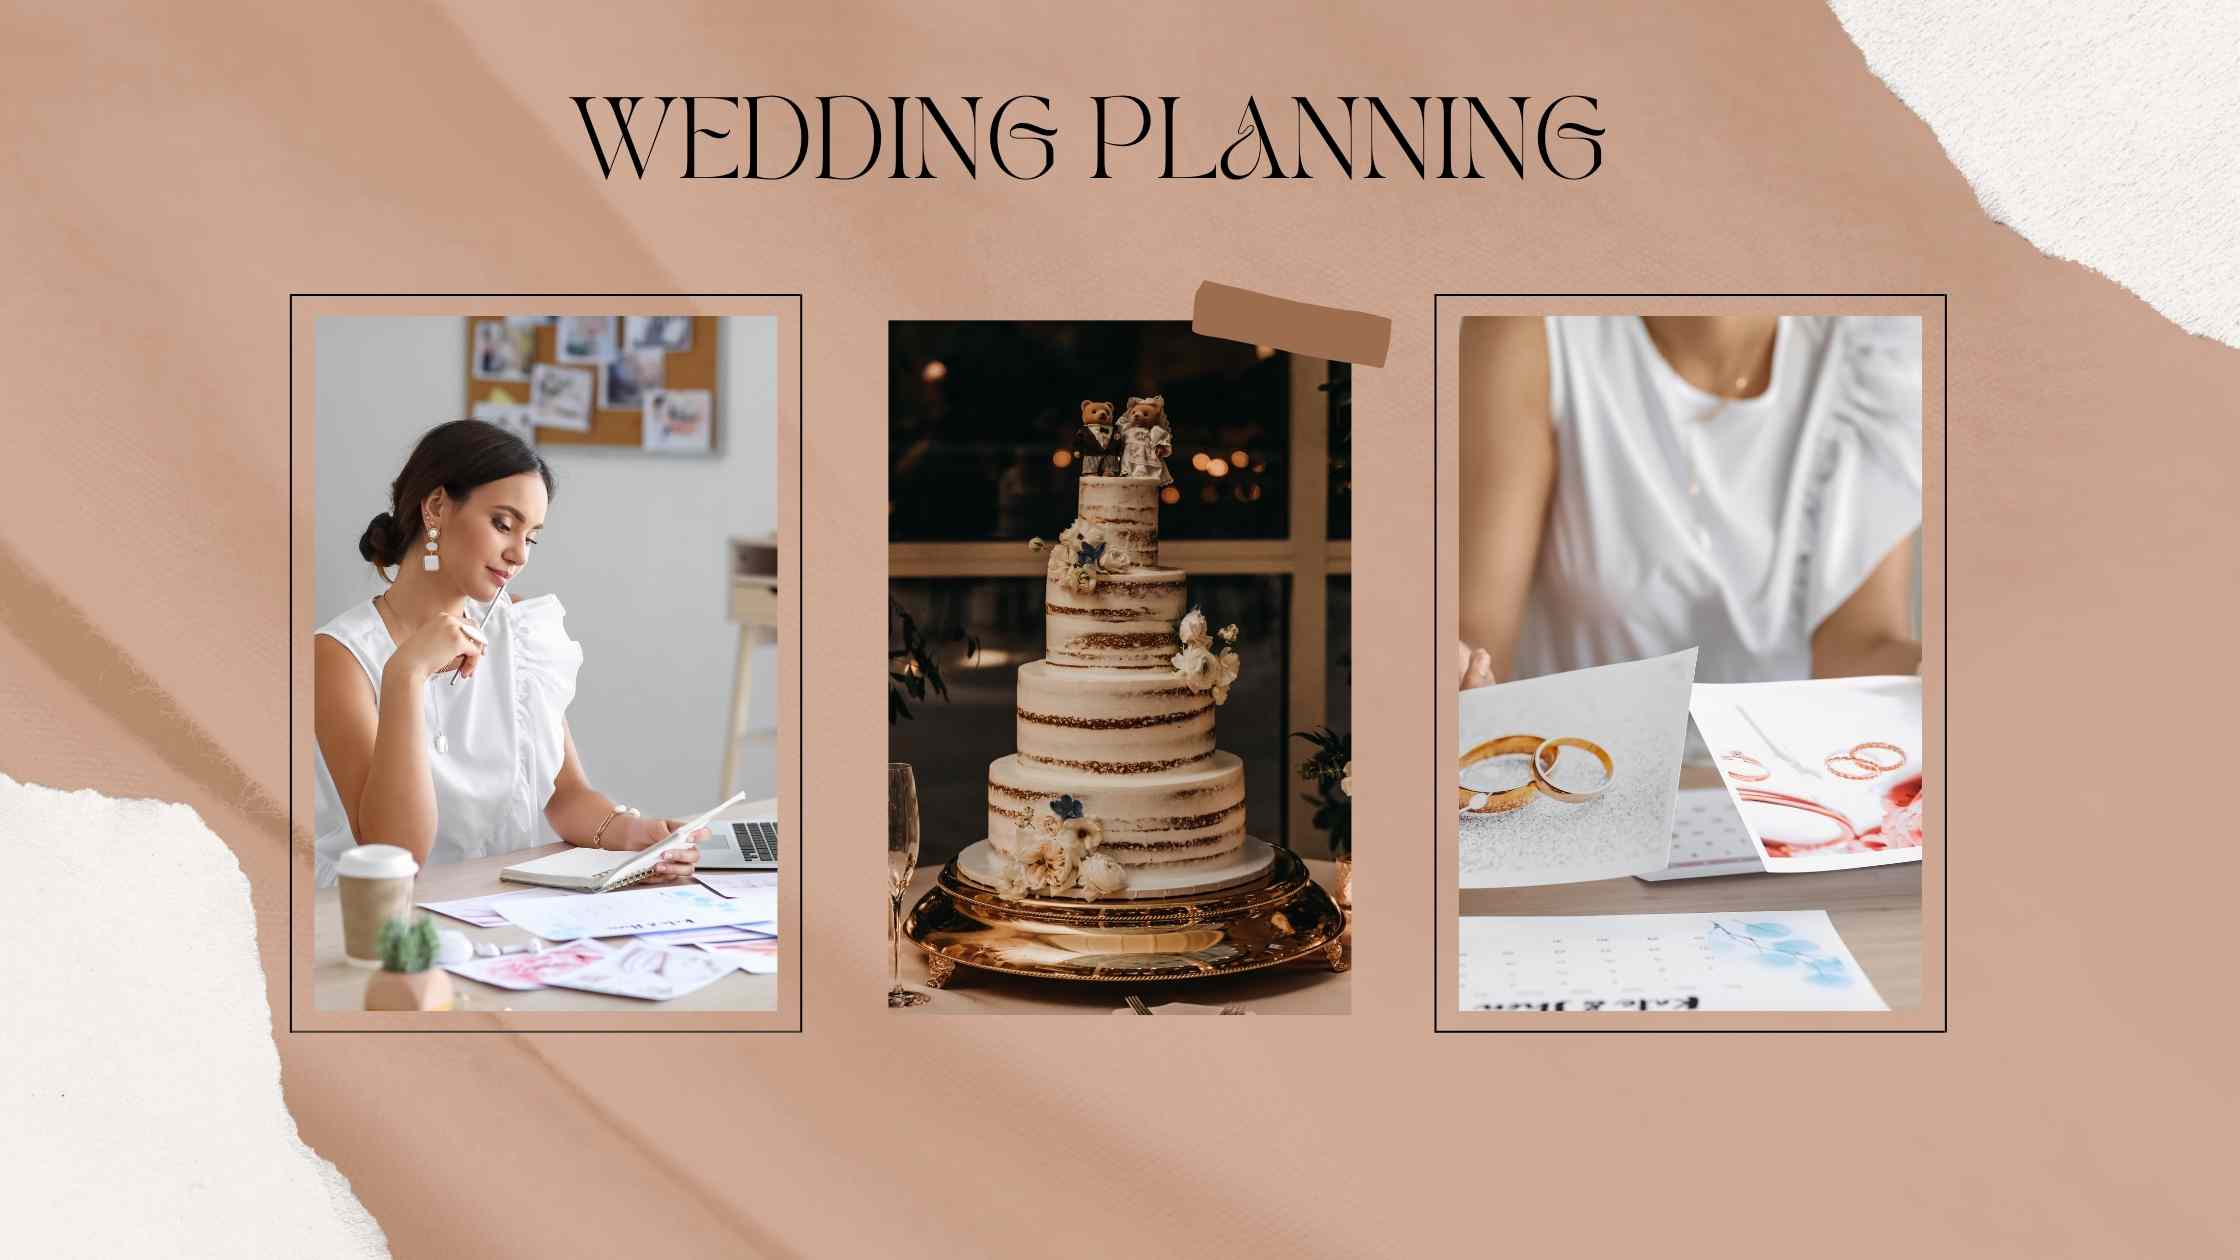 Columbus Wedding Planning, Columbus Wedding Photographers, Your Complete Wedding Planning Resource